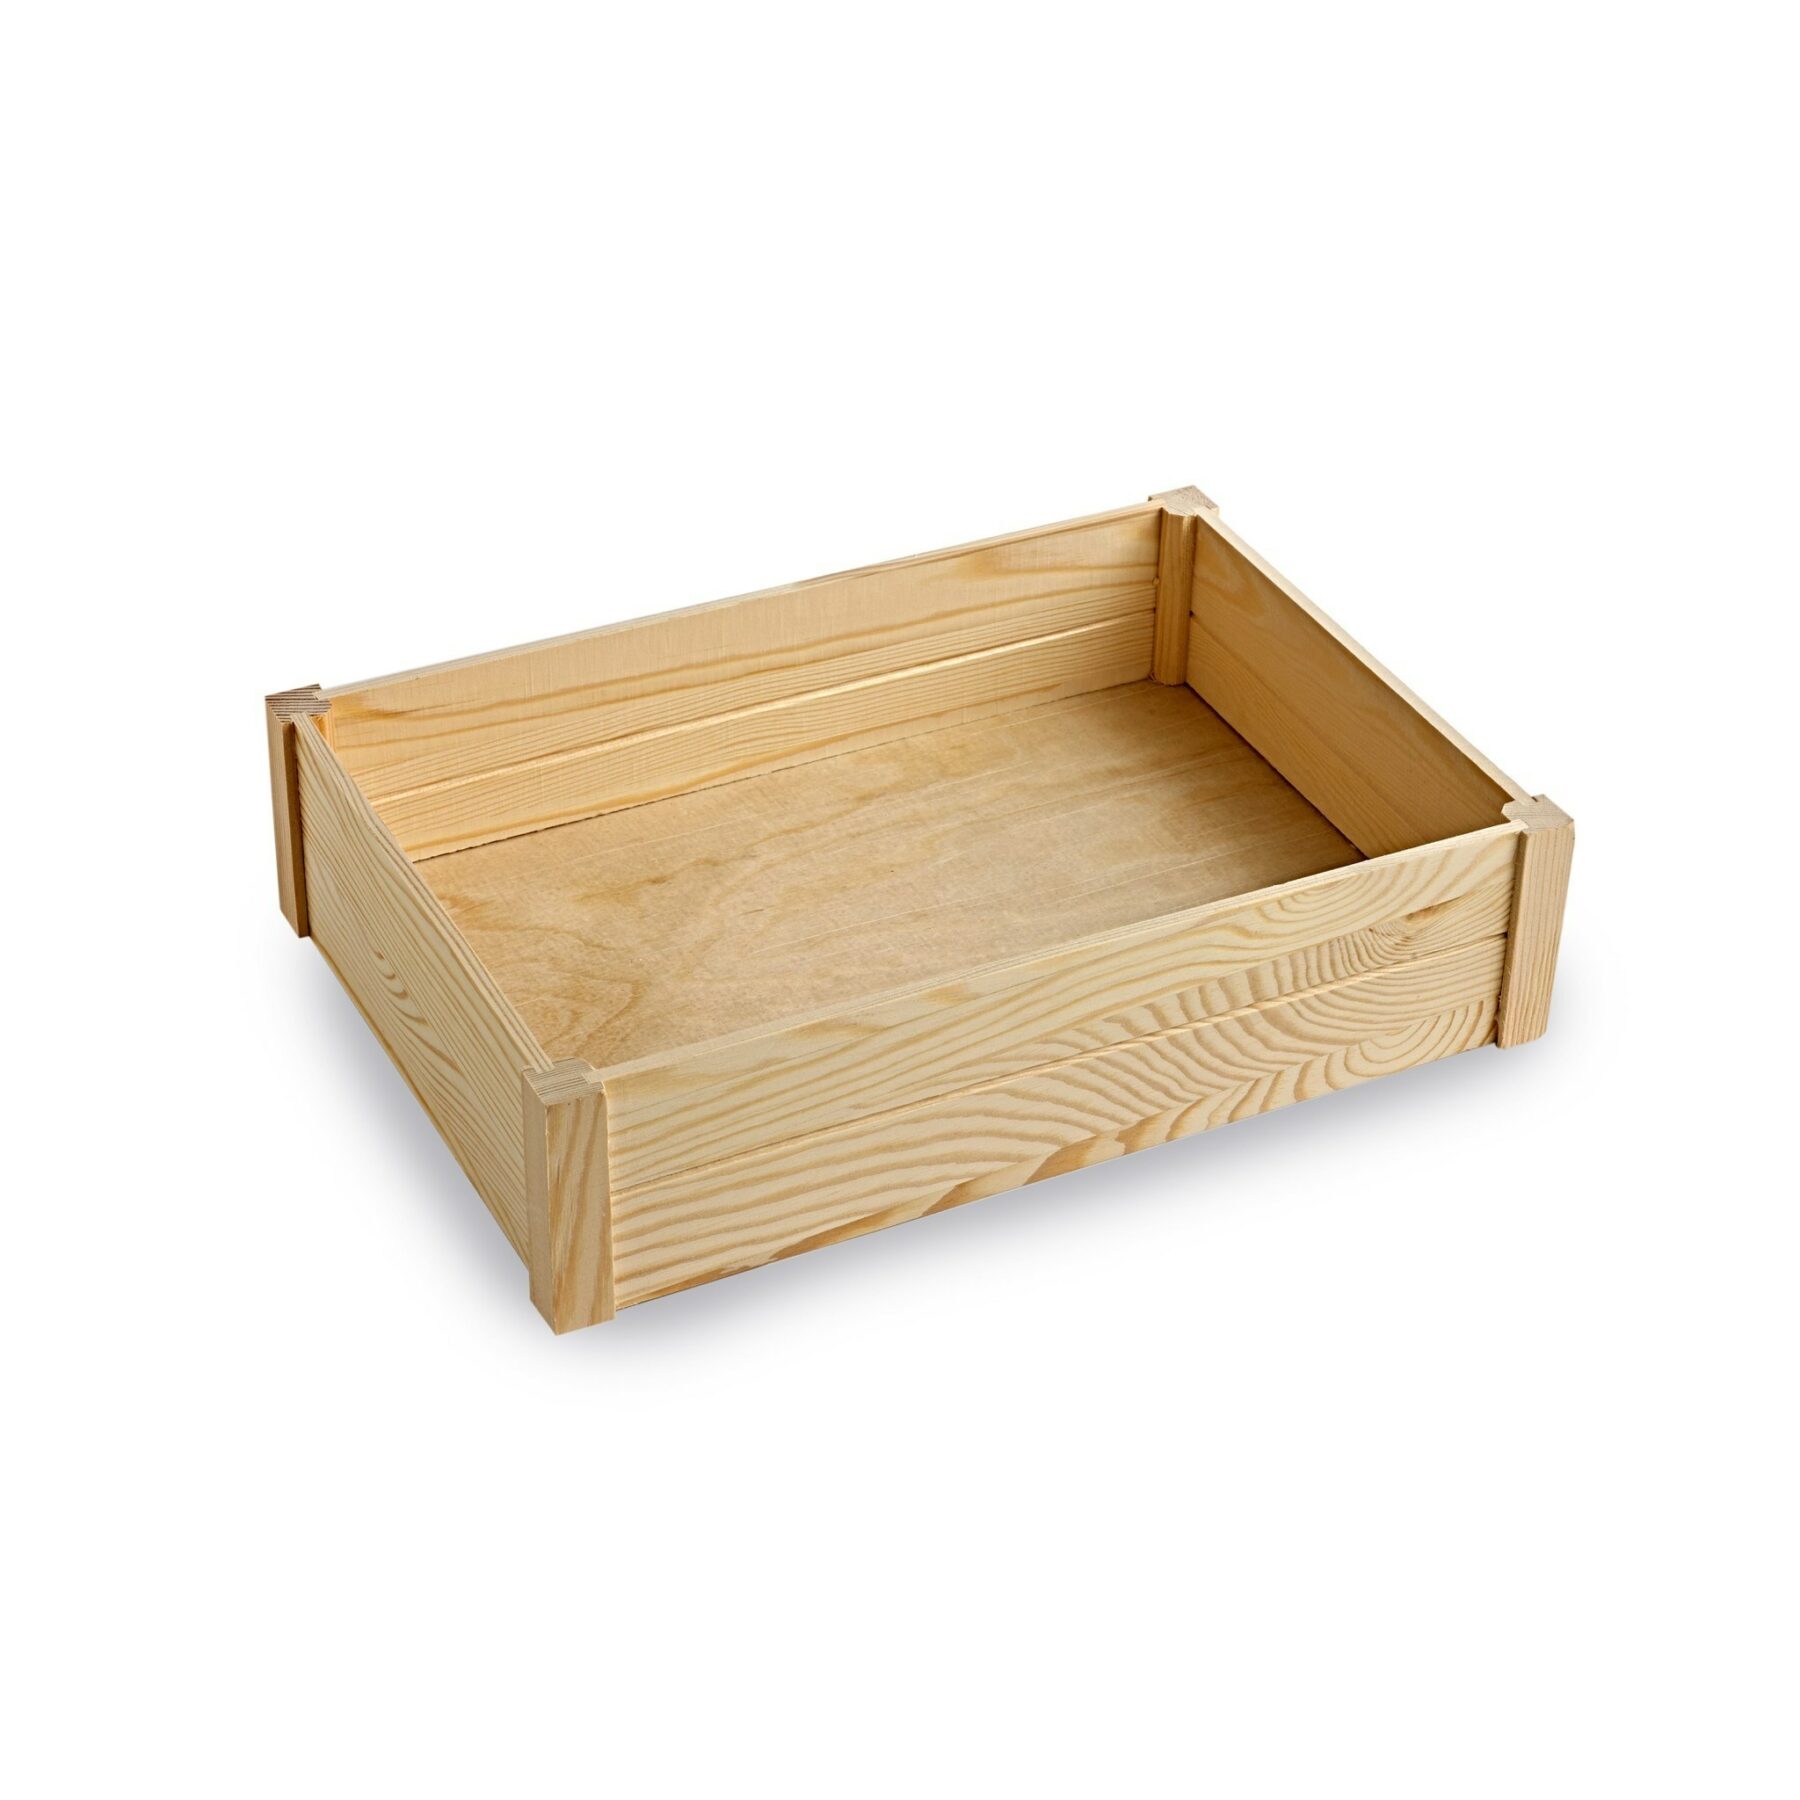 Rectangular Wooden Crate